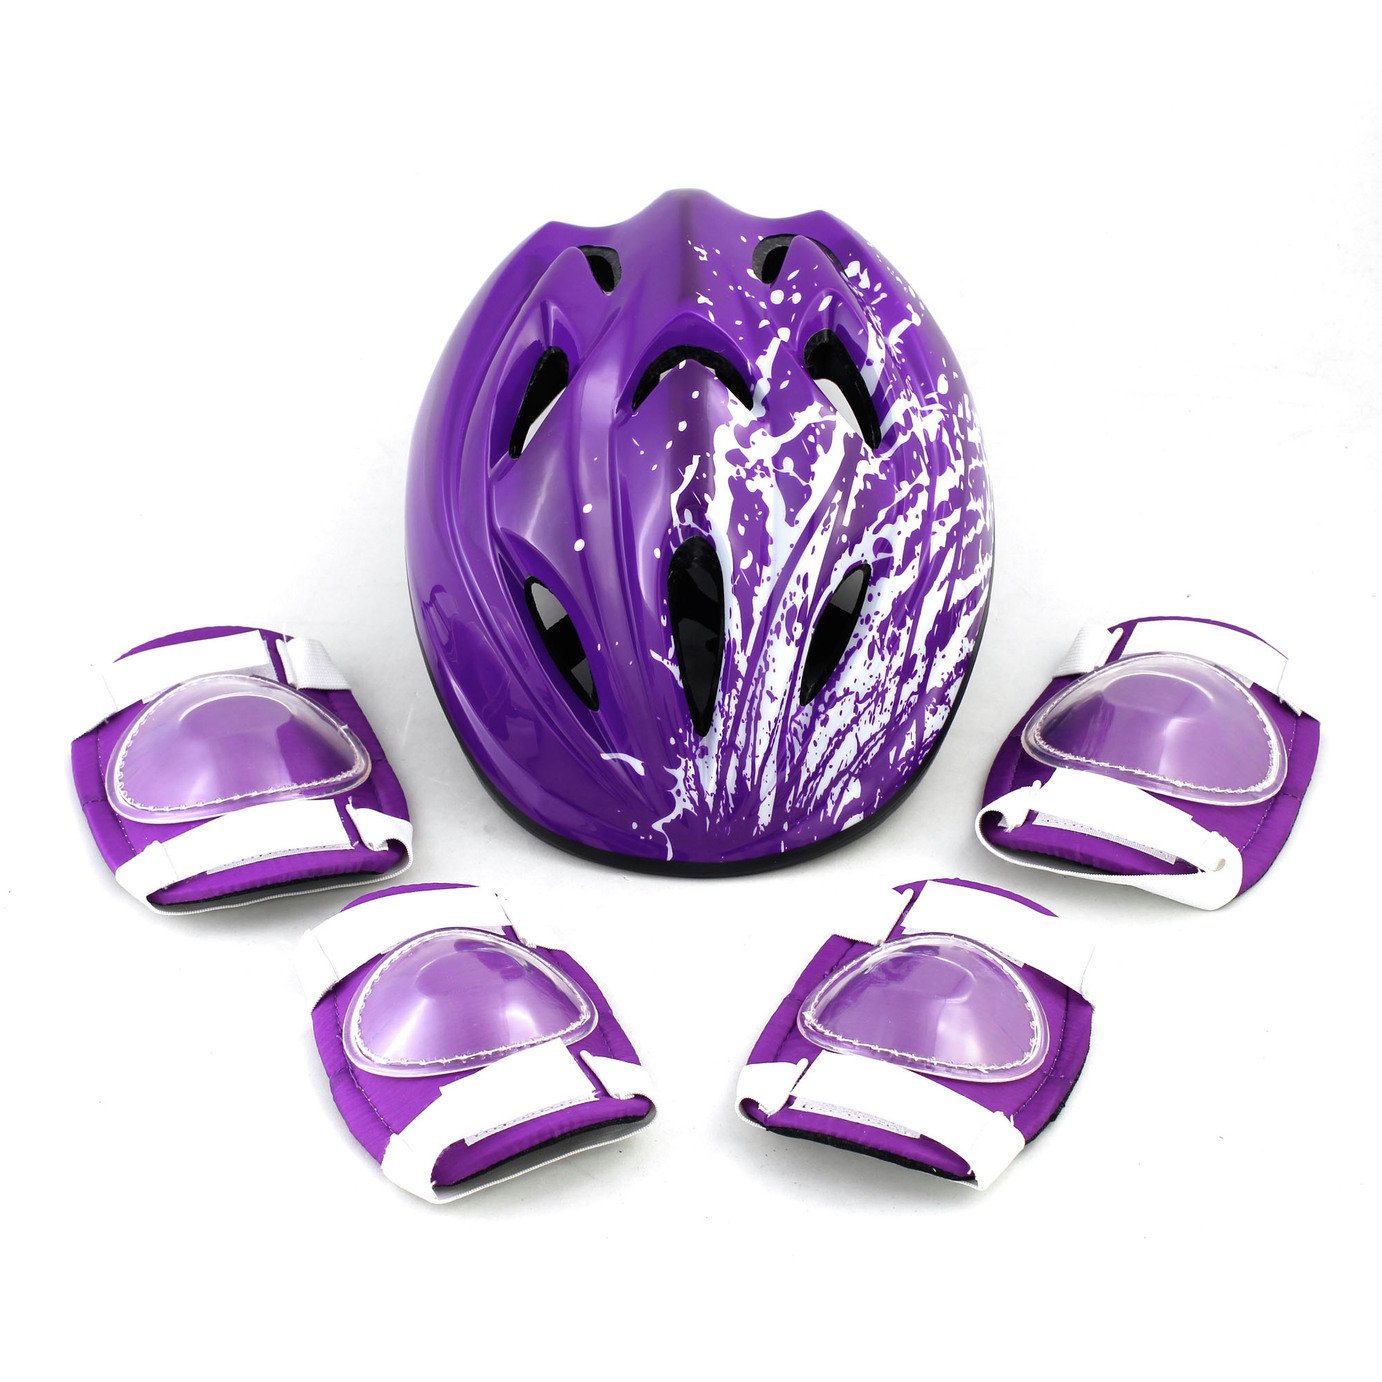 ladies cycle helmets argos